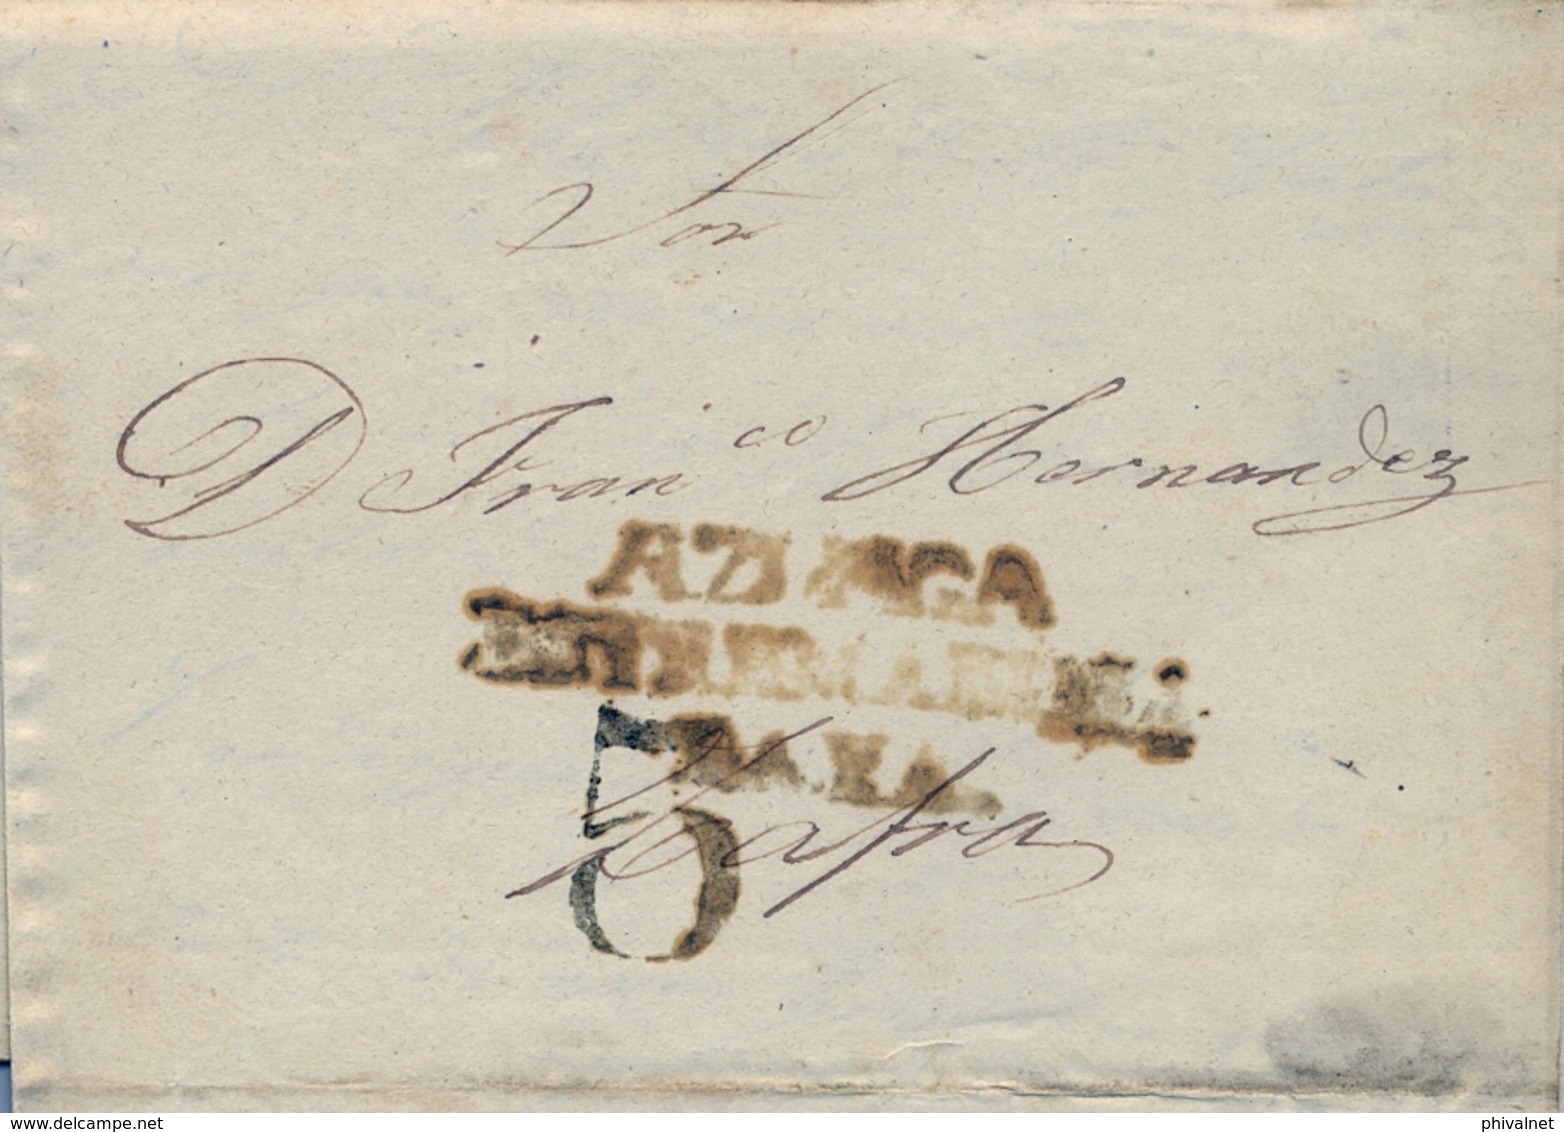 PREFILATELIA , 1848  , CARTA COMPLETA  , BADAJOZ  , AZUAGA - ZAFRA  , T. 1 - ...-1850 Prefilatelia